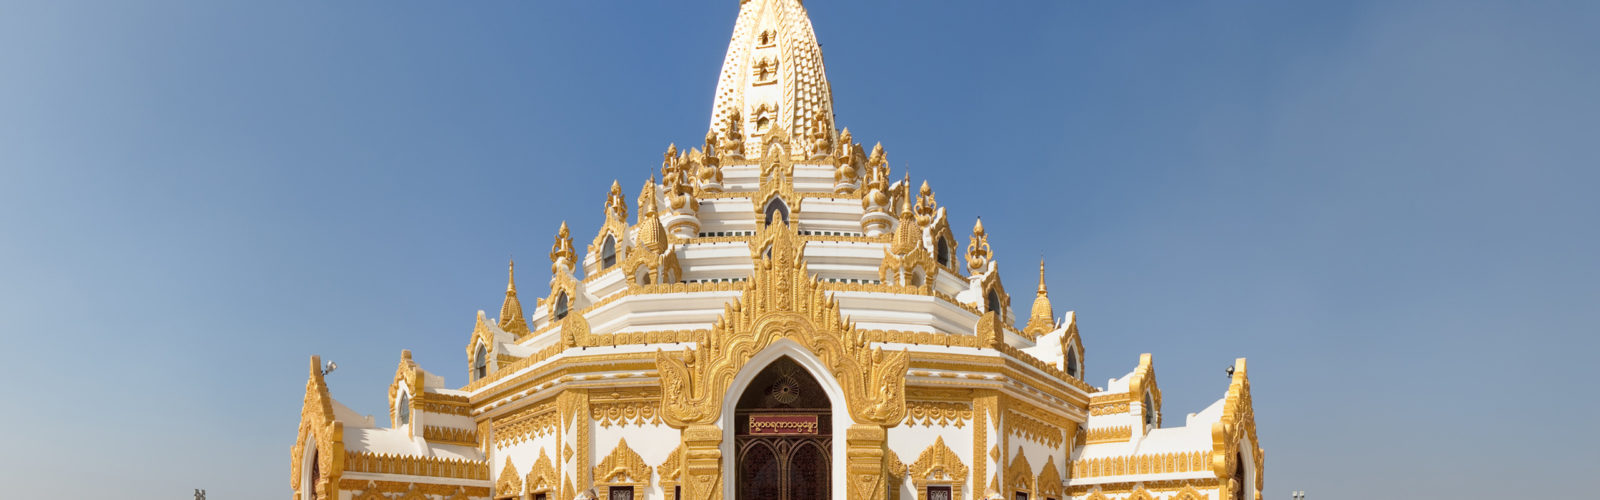 mandalay-pagoda